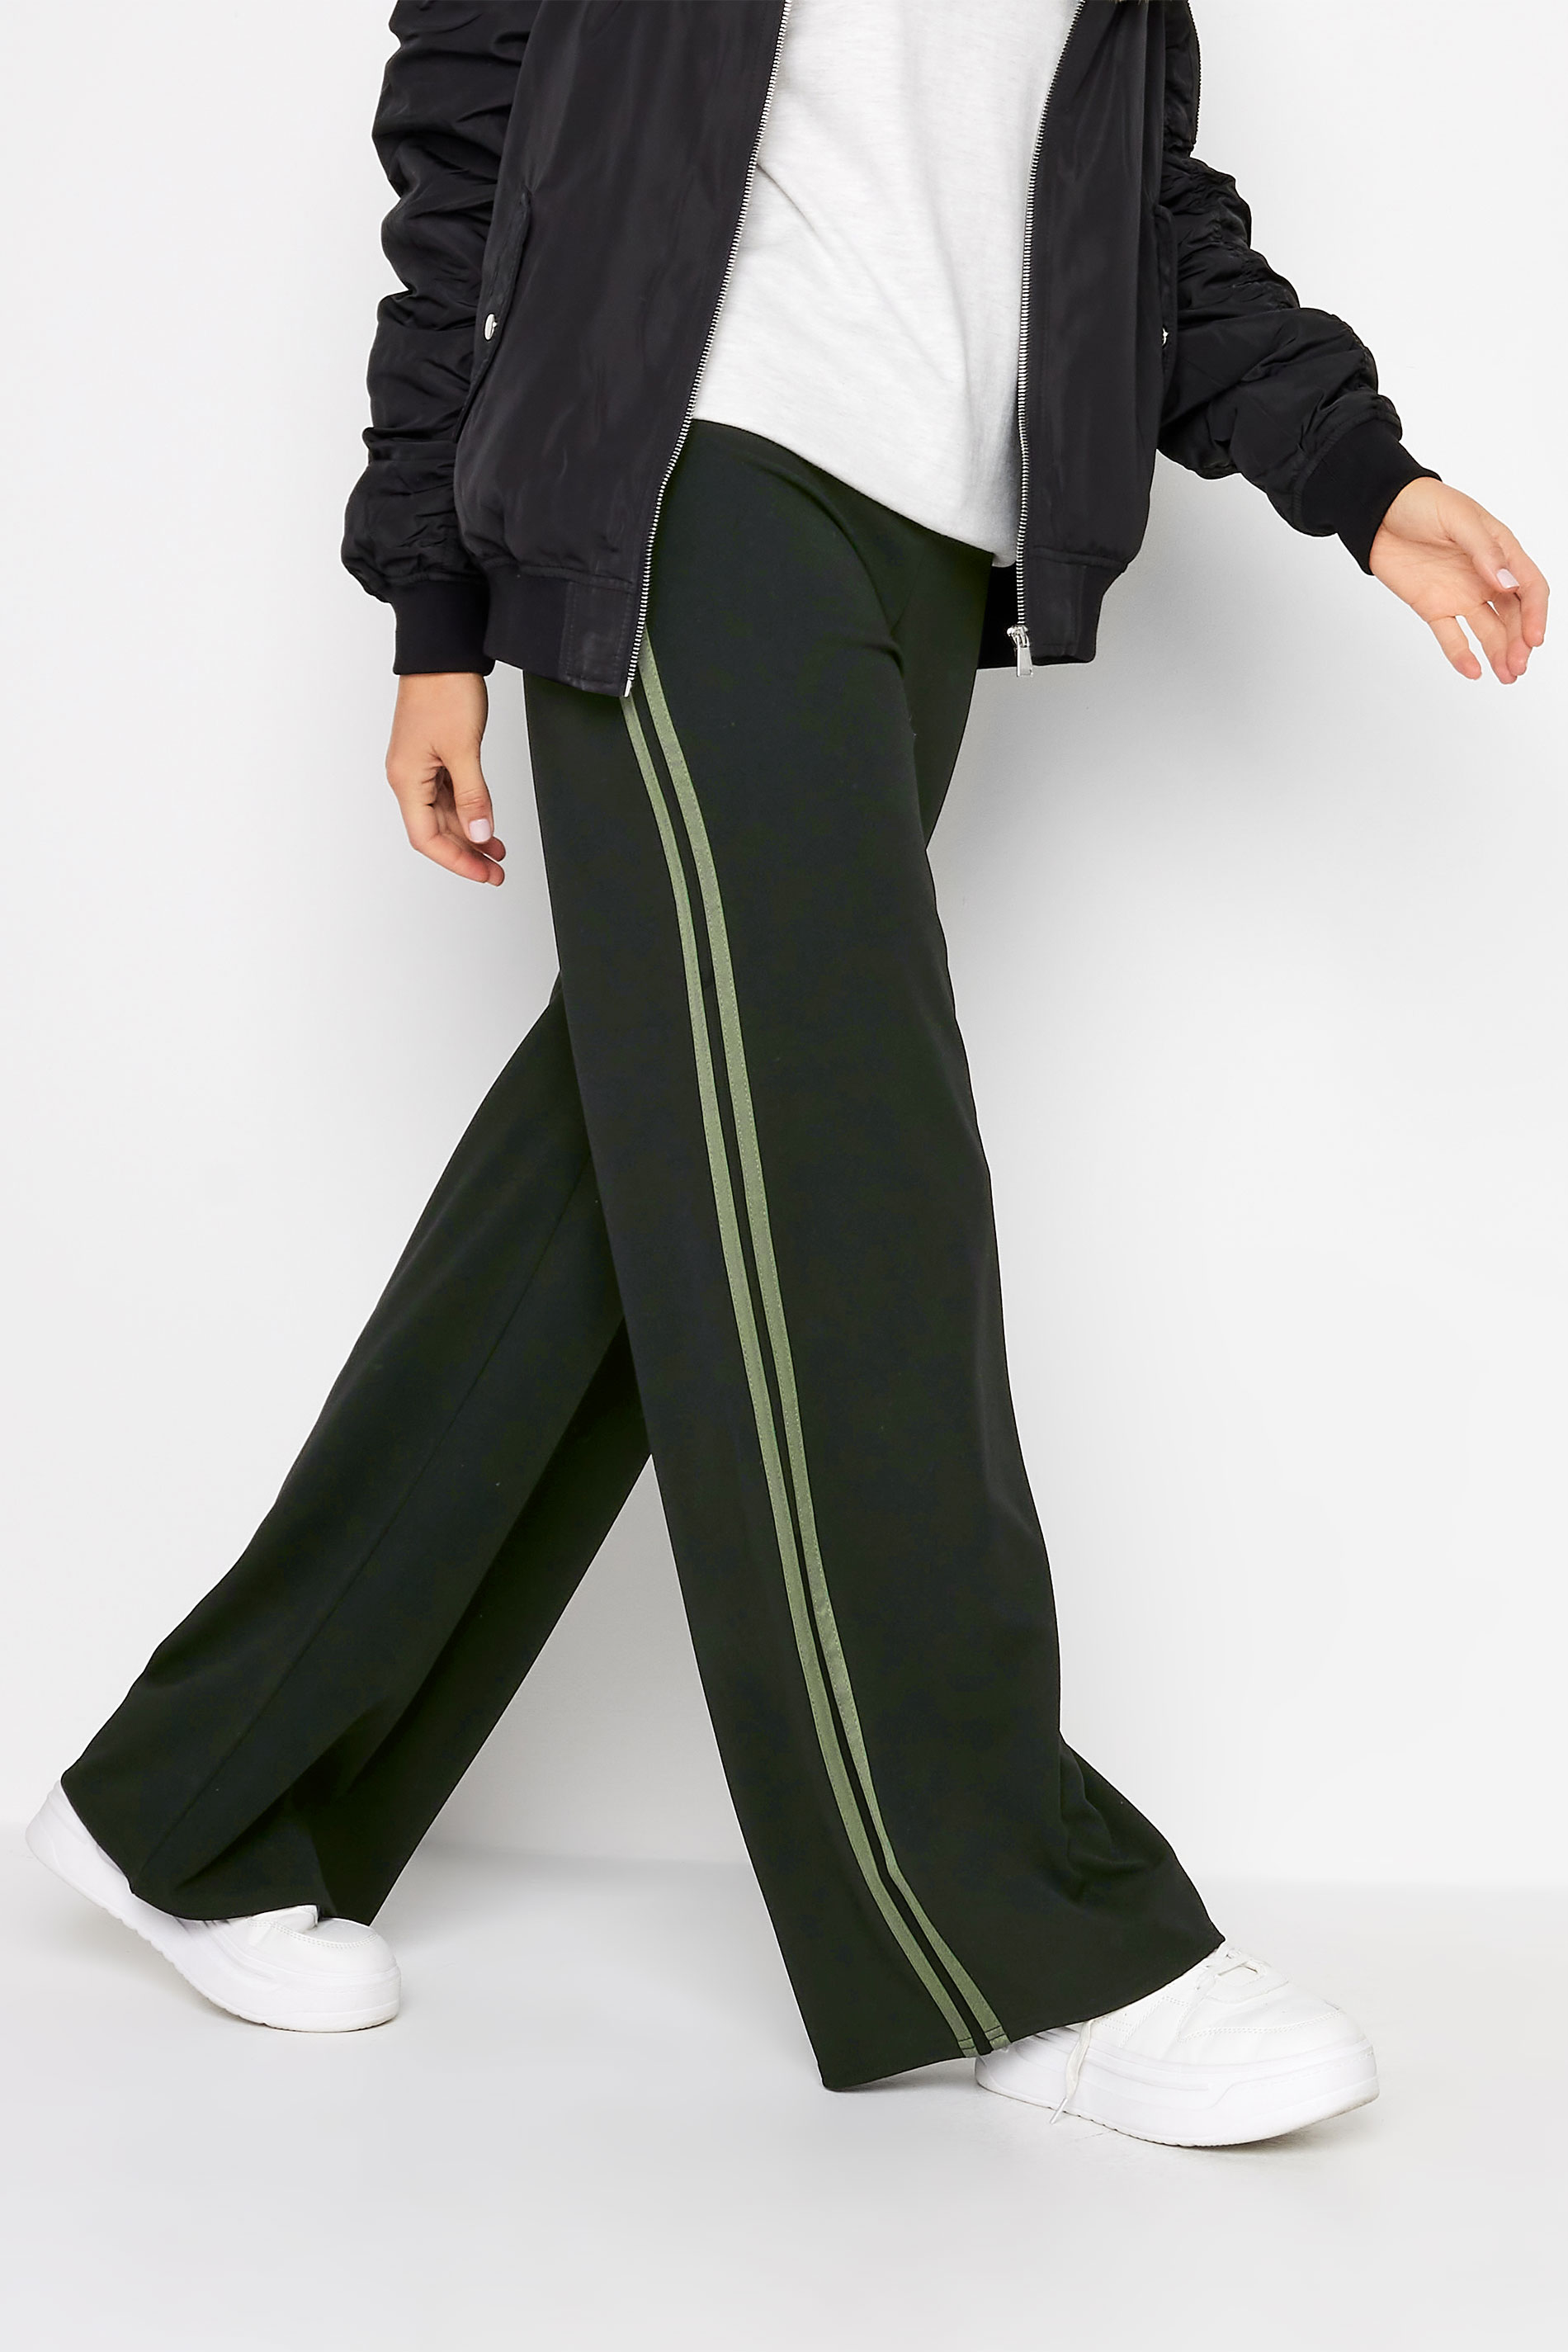 LTS Tall Black & Khaki Green Stripe Wide Leg Trousers | Long Tall Sally  1